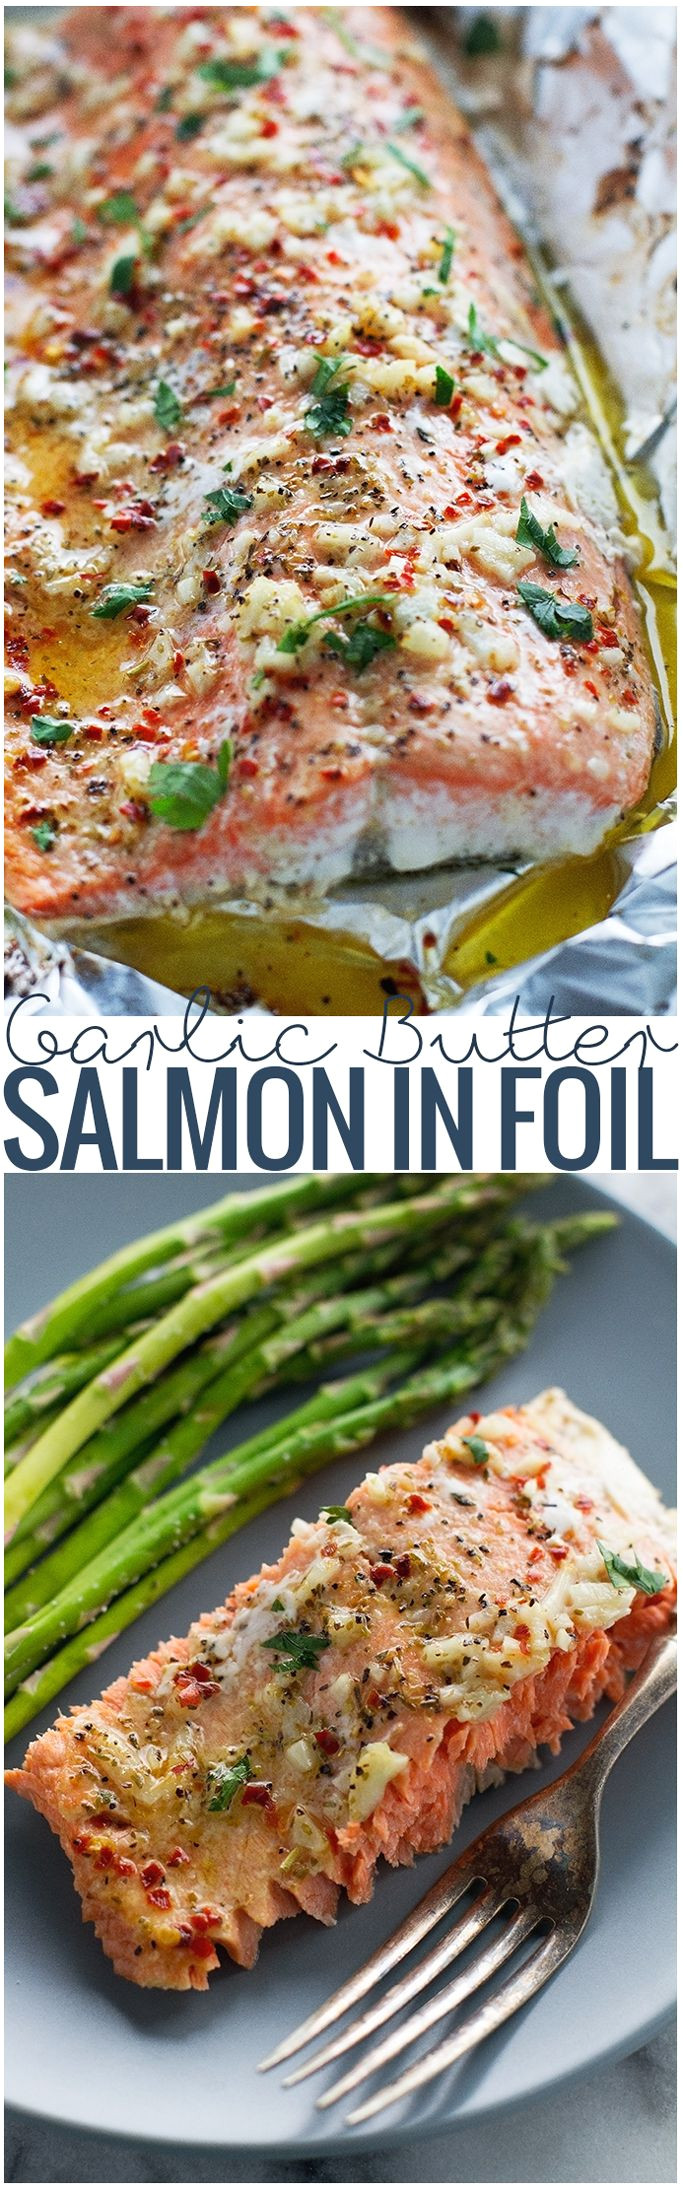 garlic butter baked salmon in foil